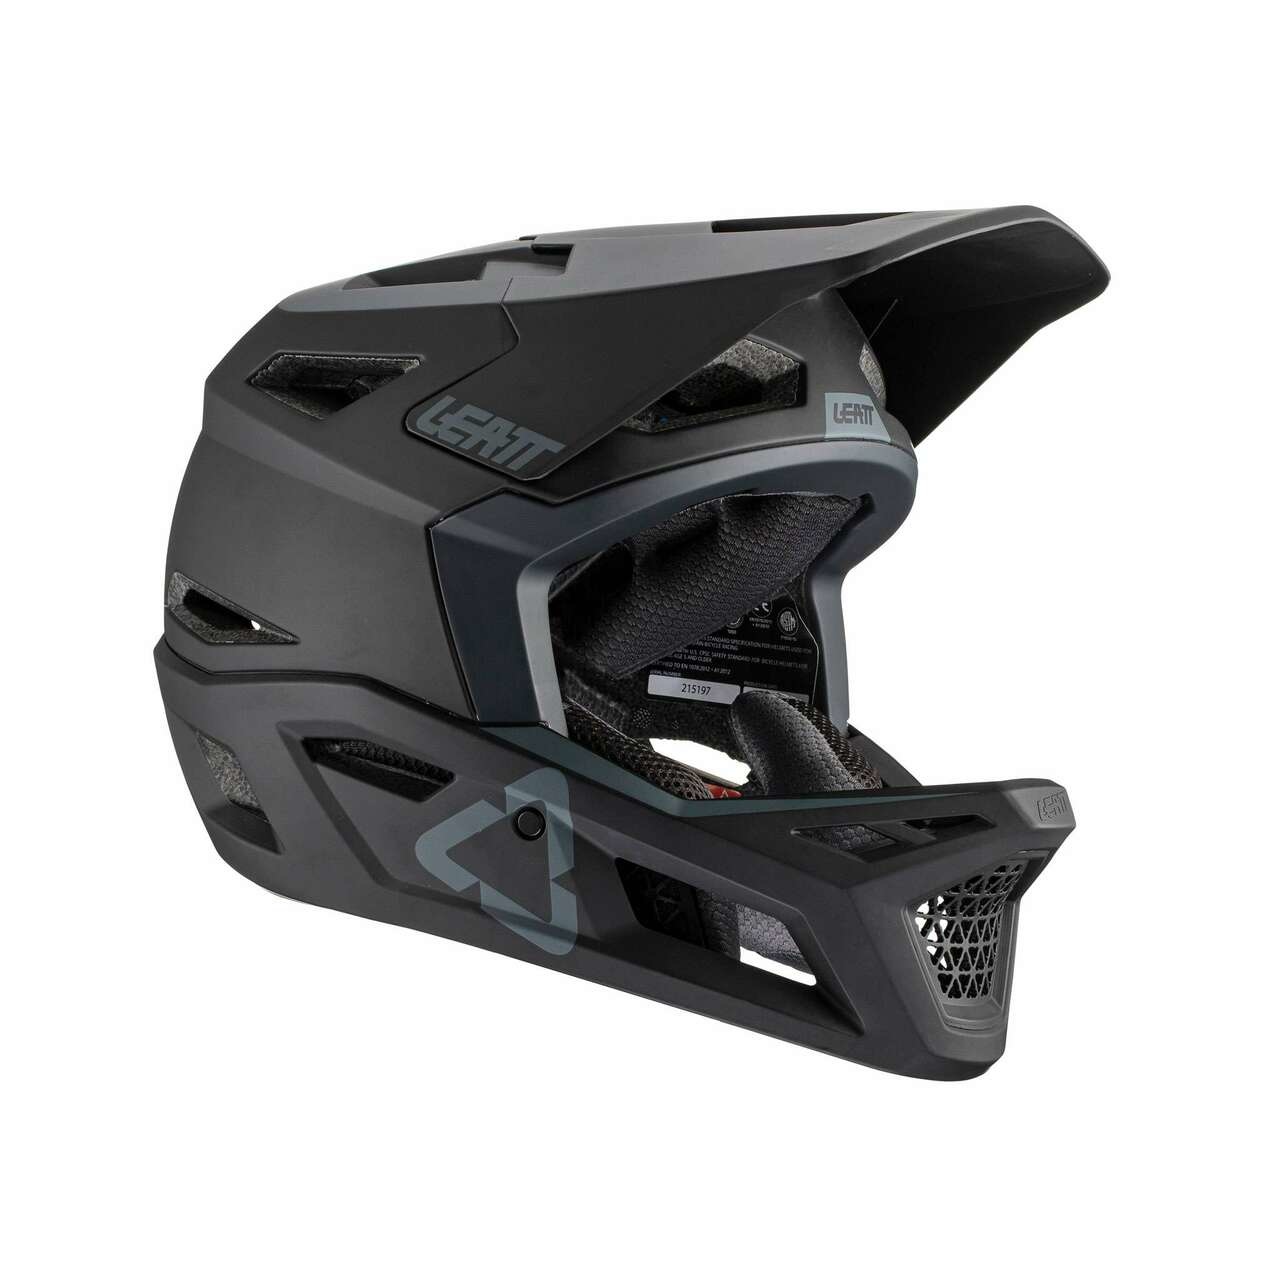 Leatt Leatt, MTB 4.0, Full Face Helmet, Black, L, 59 - 60cm